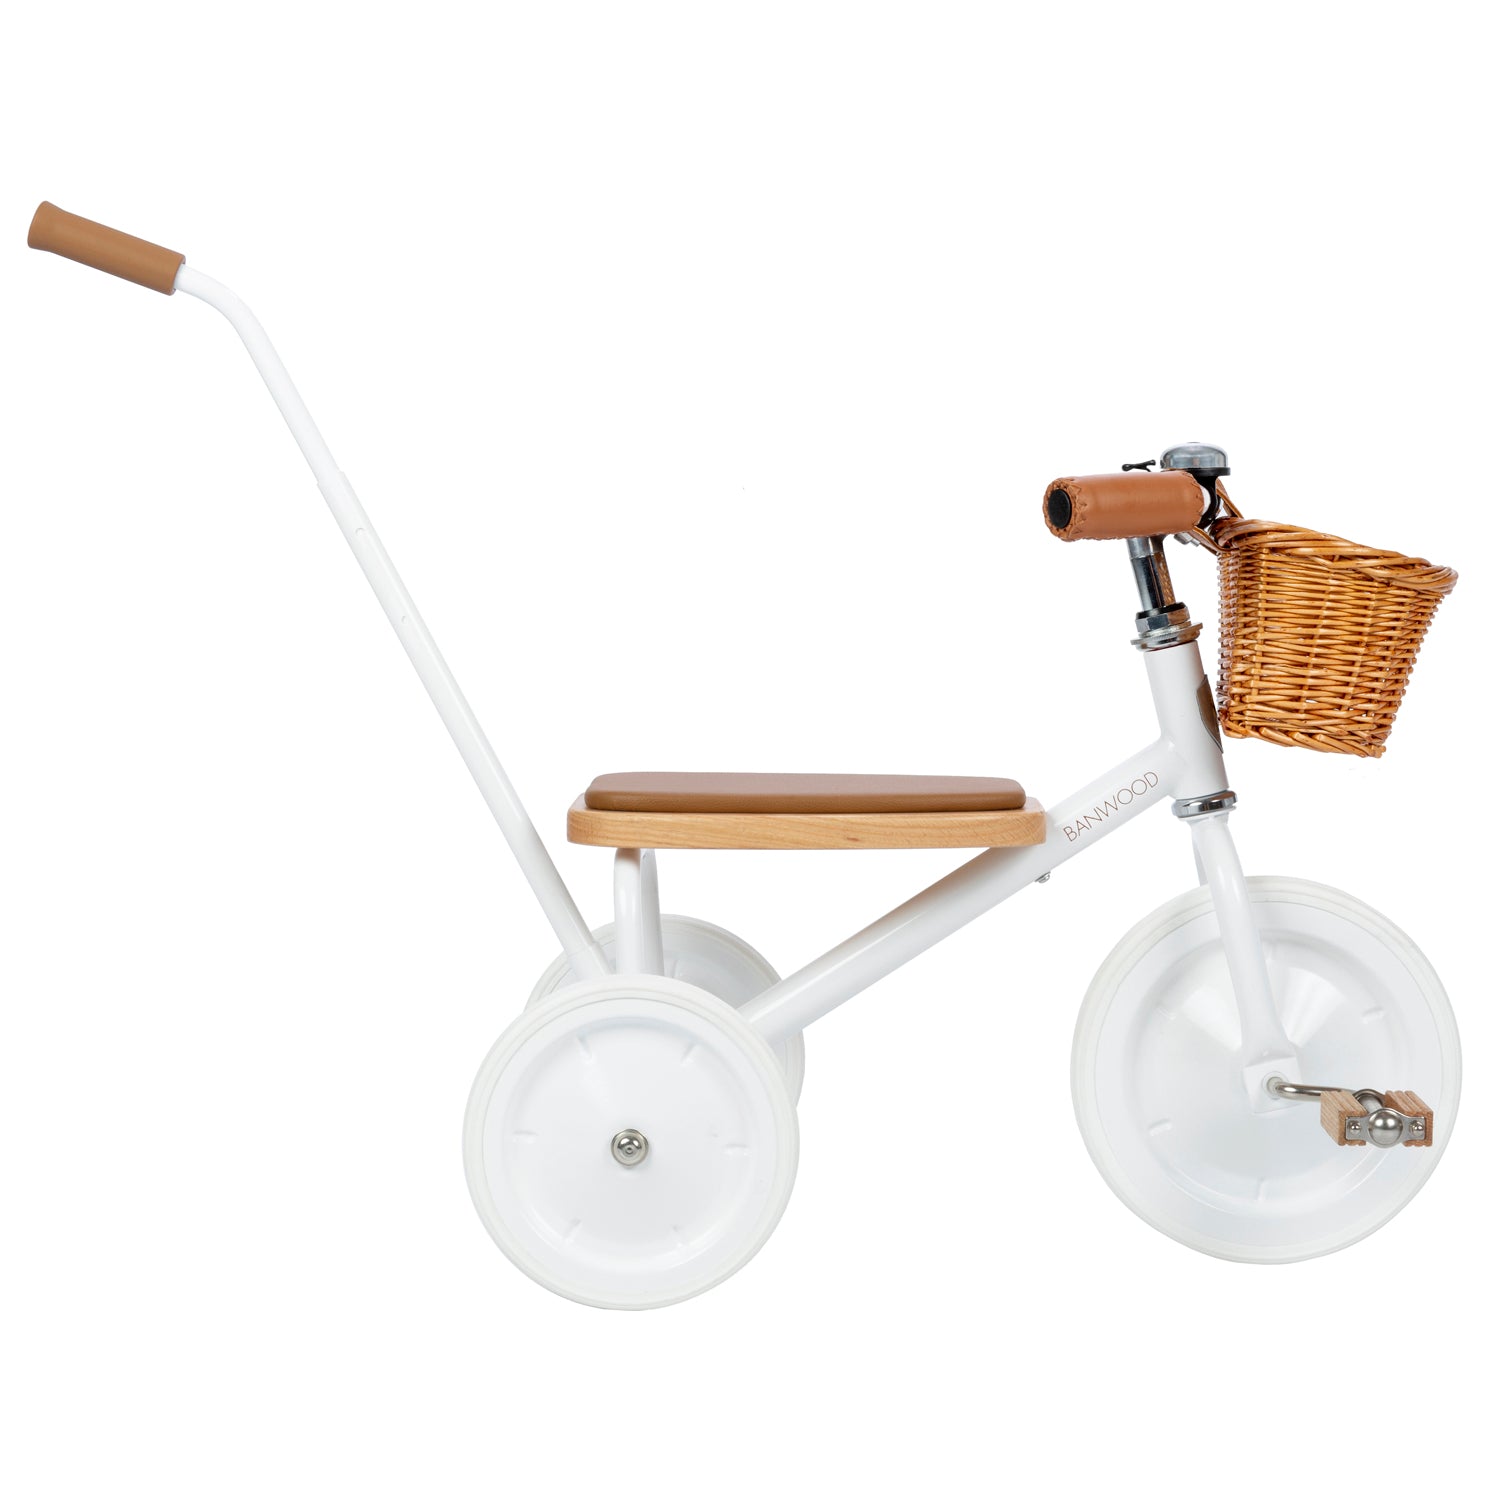 Triciclo Banwood vintage blanco